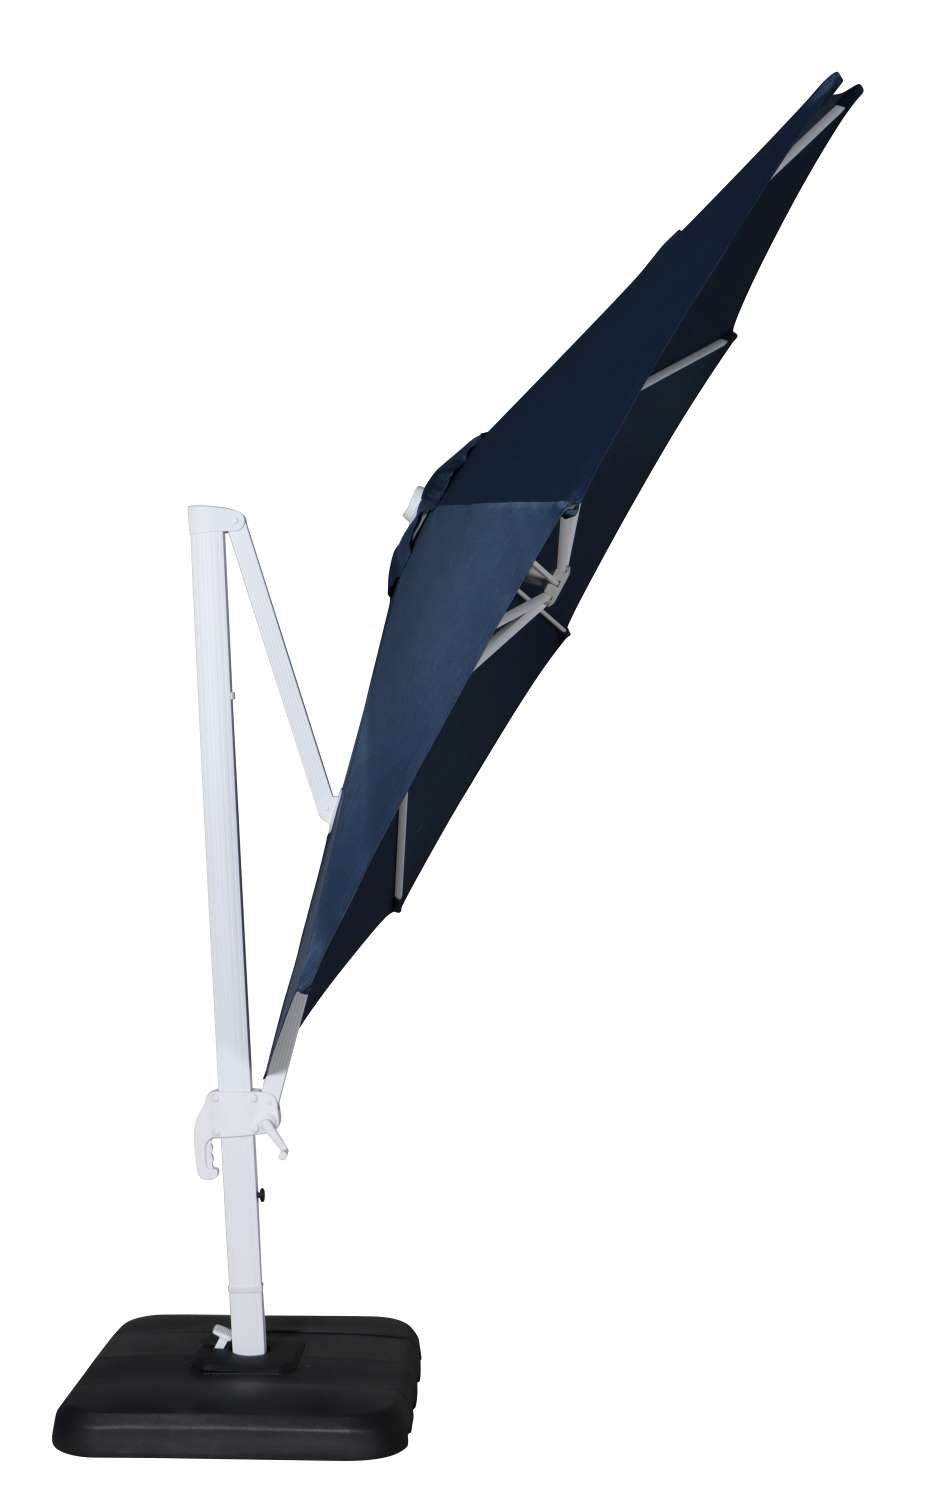 Sunrio Cantilever 11' Umbrella - Navy, White